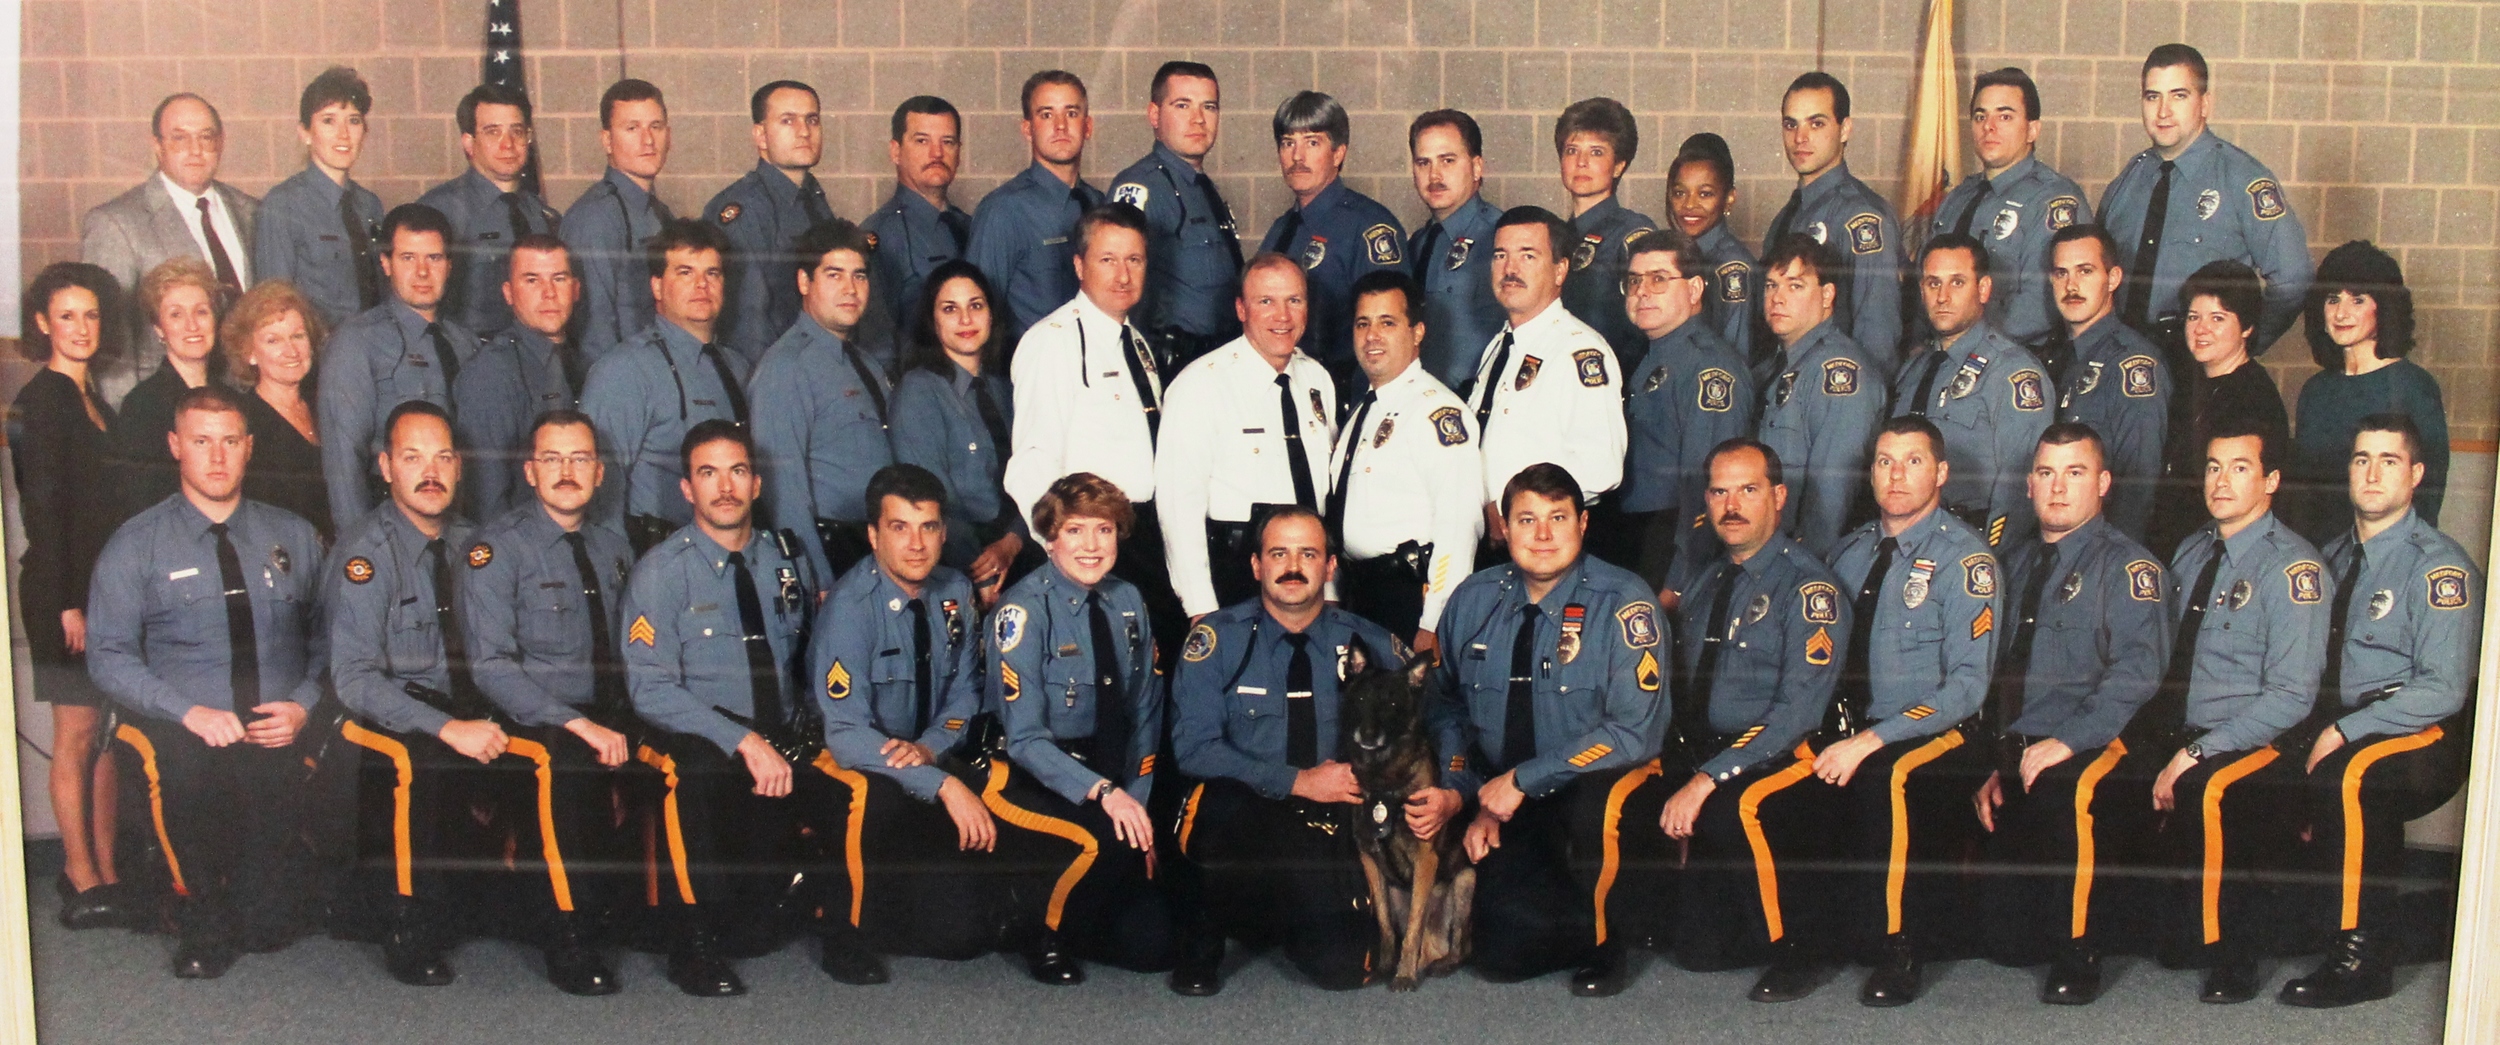 1996 Department Photo